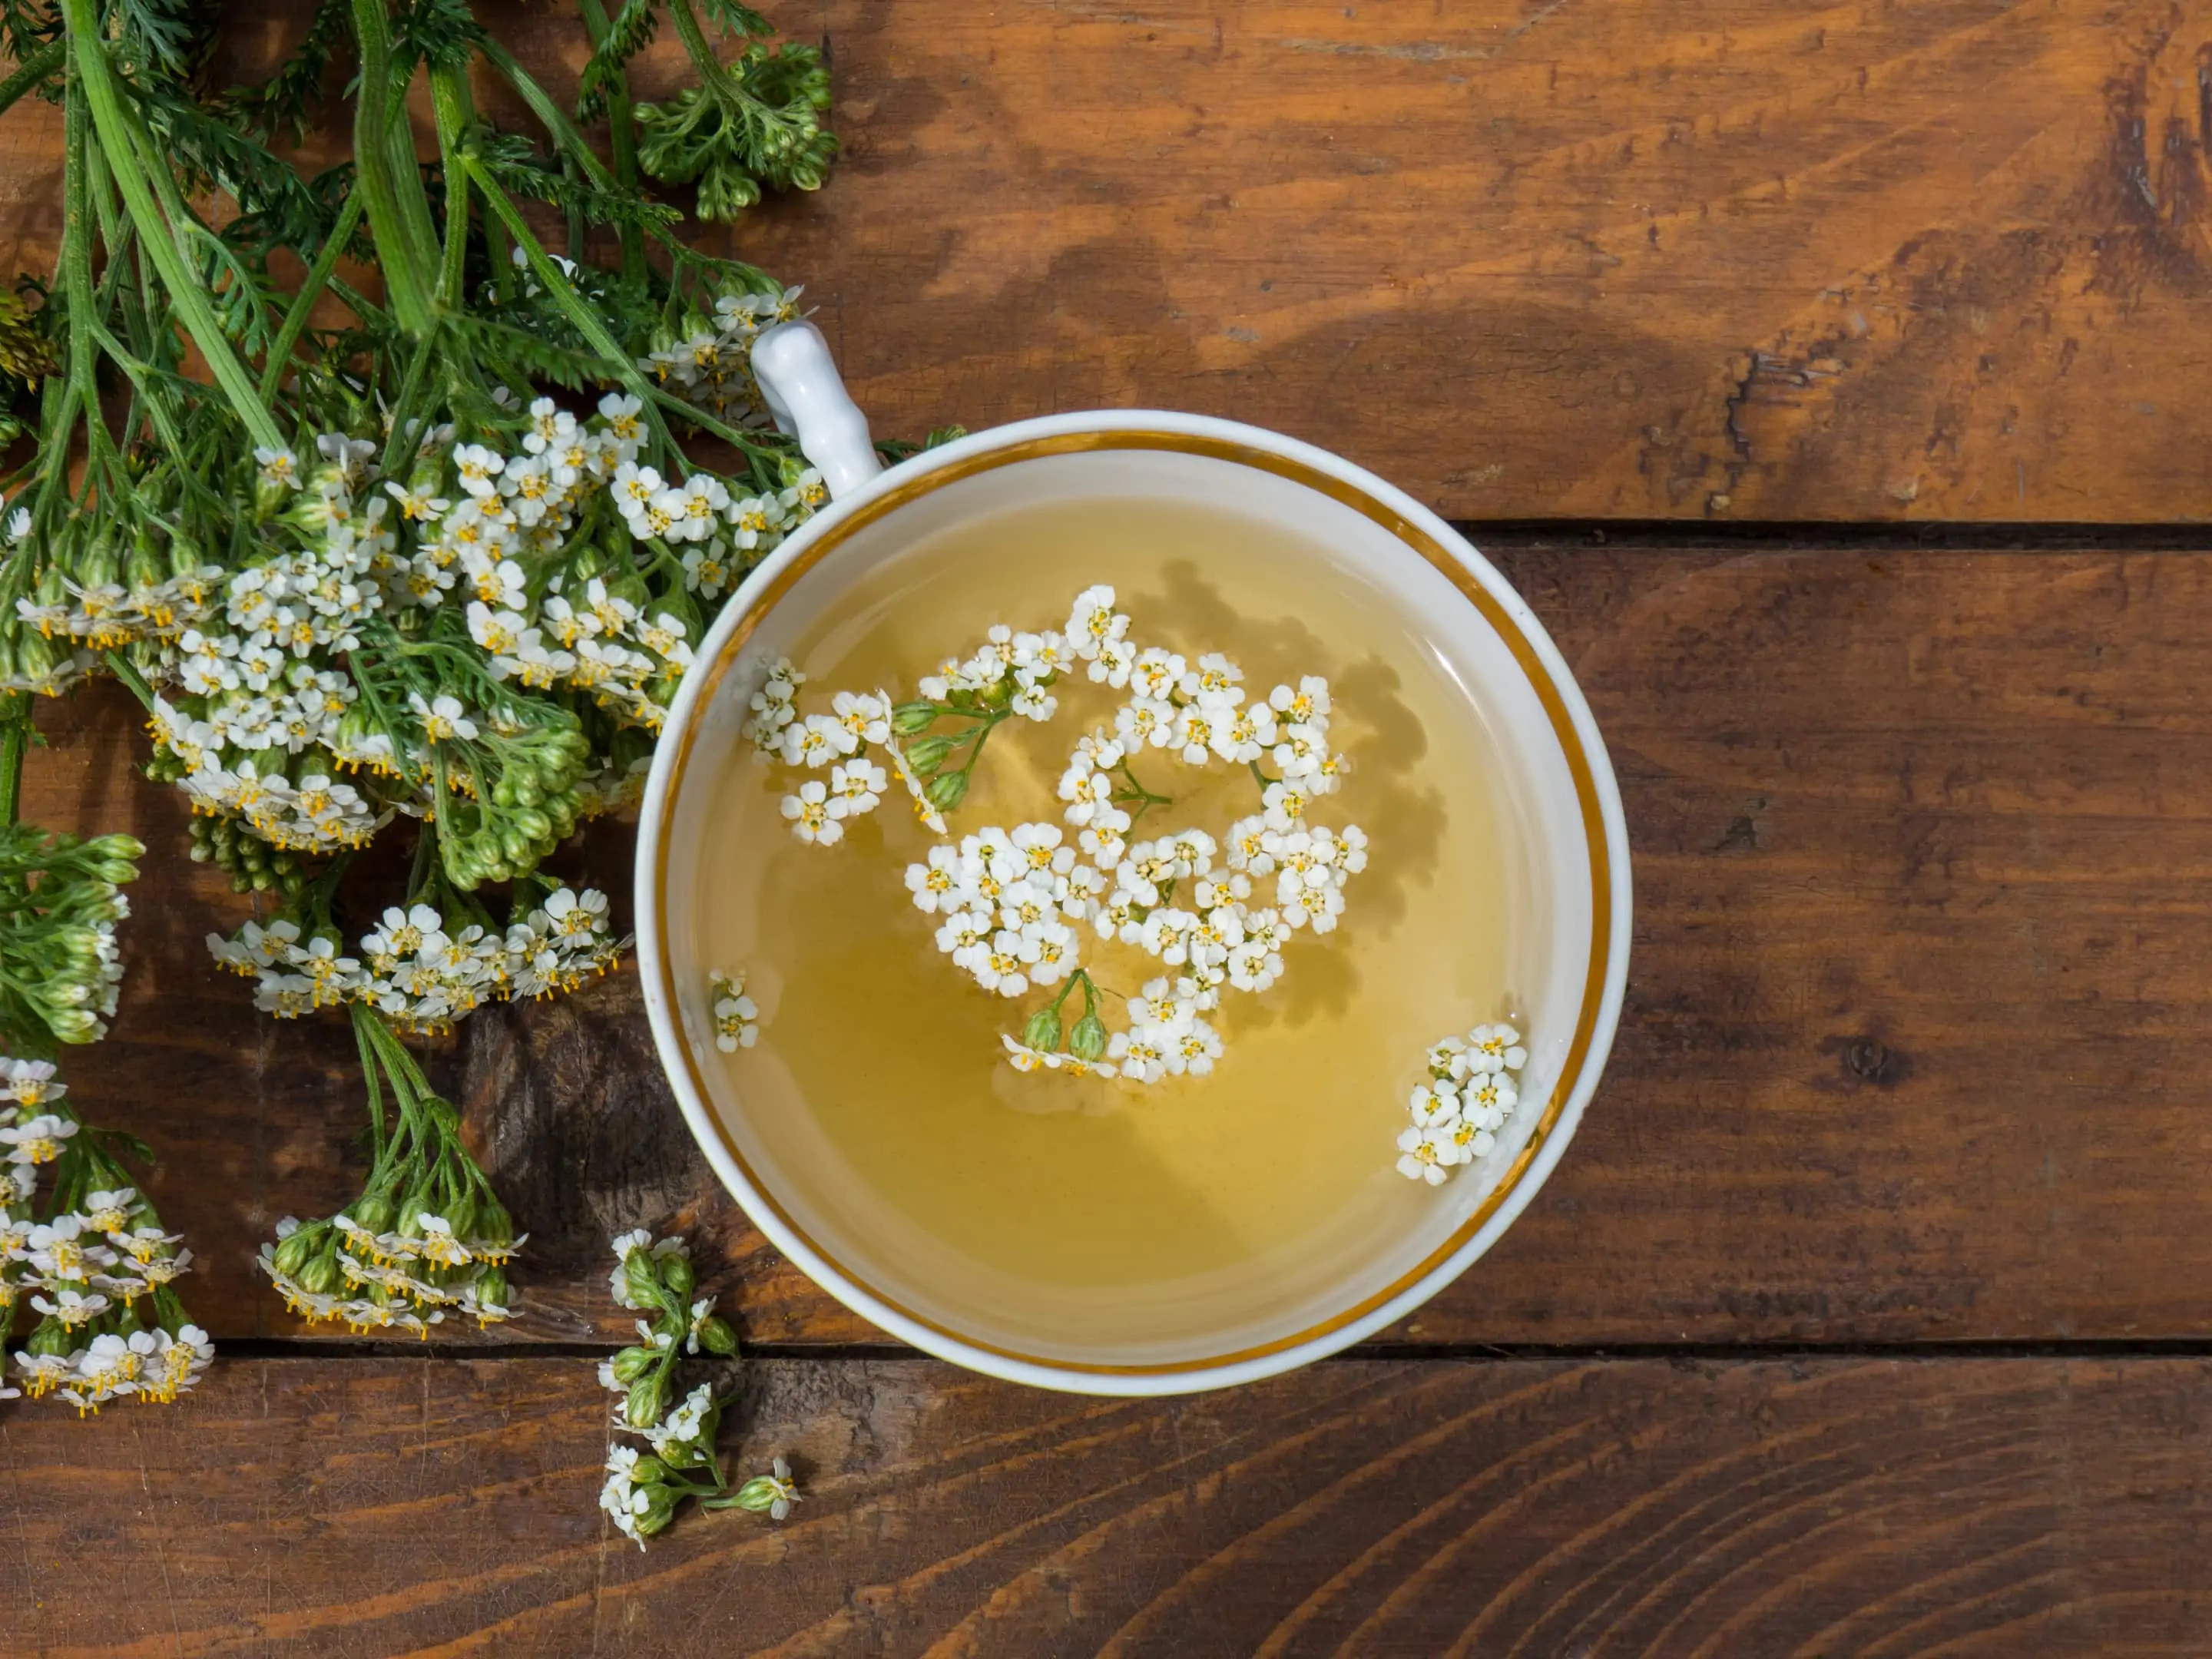 Yarrow herb — medicinal plant — tea mug with yarrow flowers